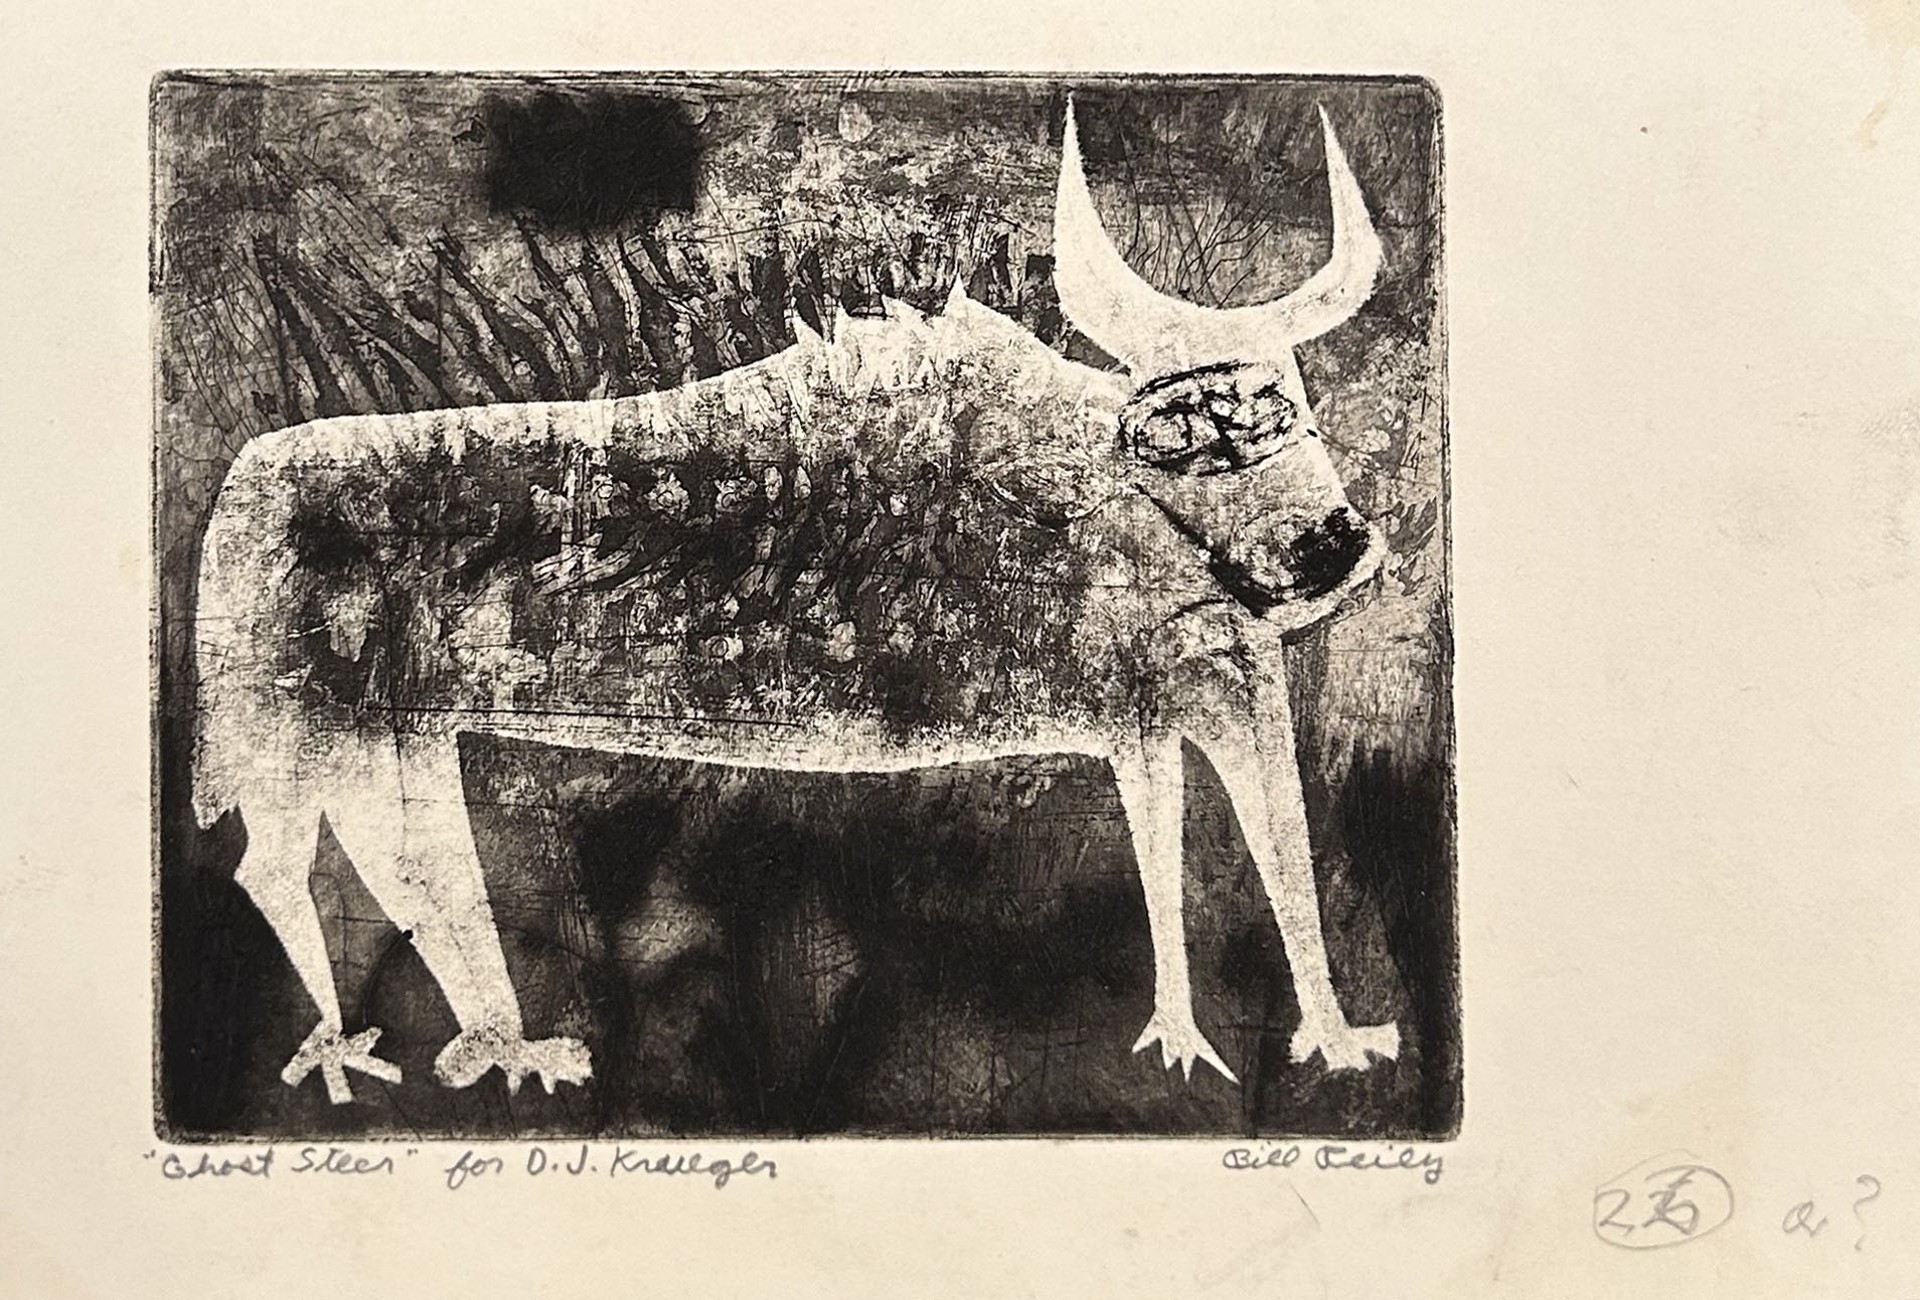 26a(2). Ghost Steer (for D.J. Krueger) by Bill Reily Prints